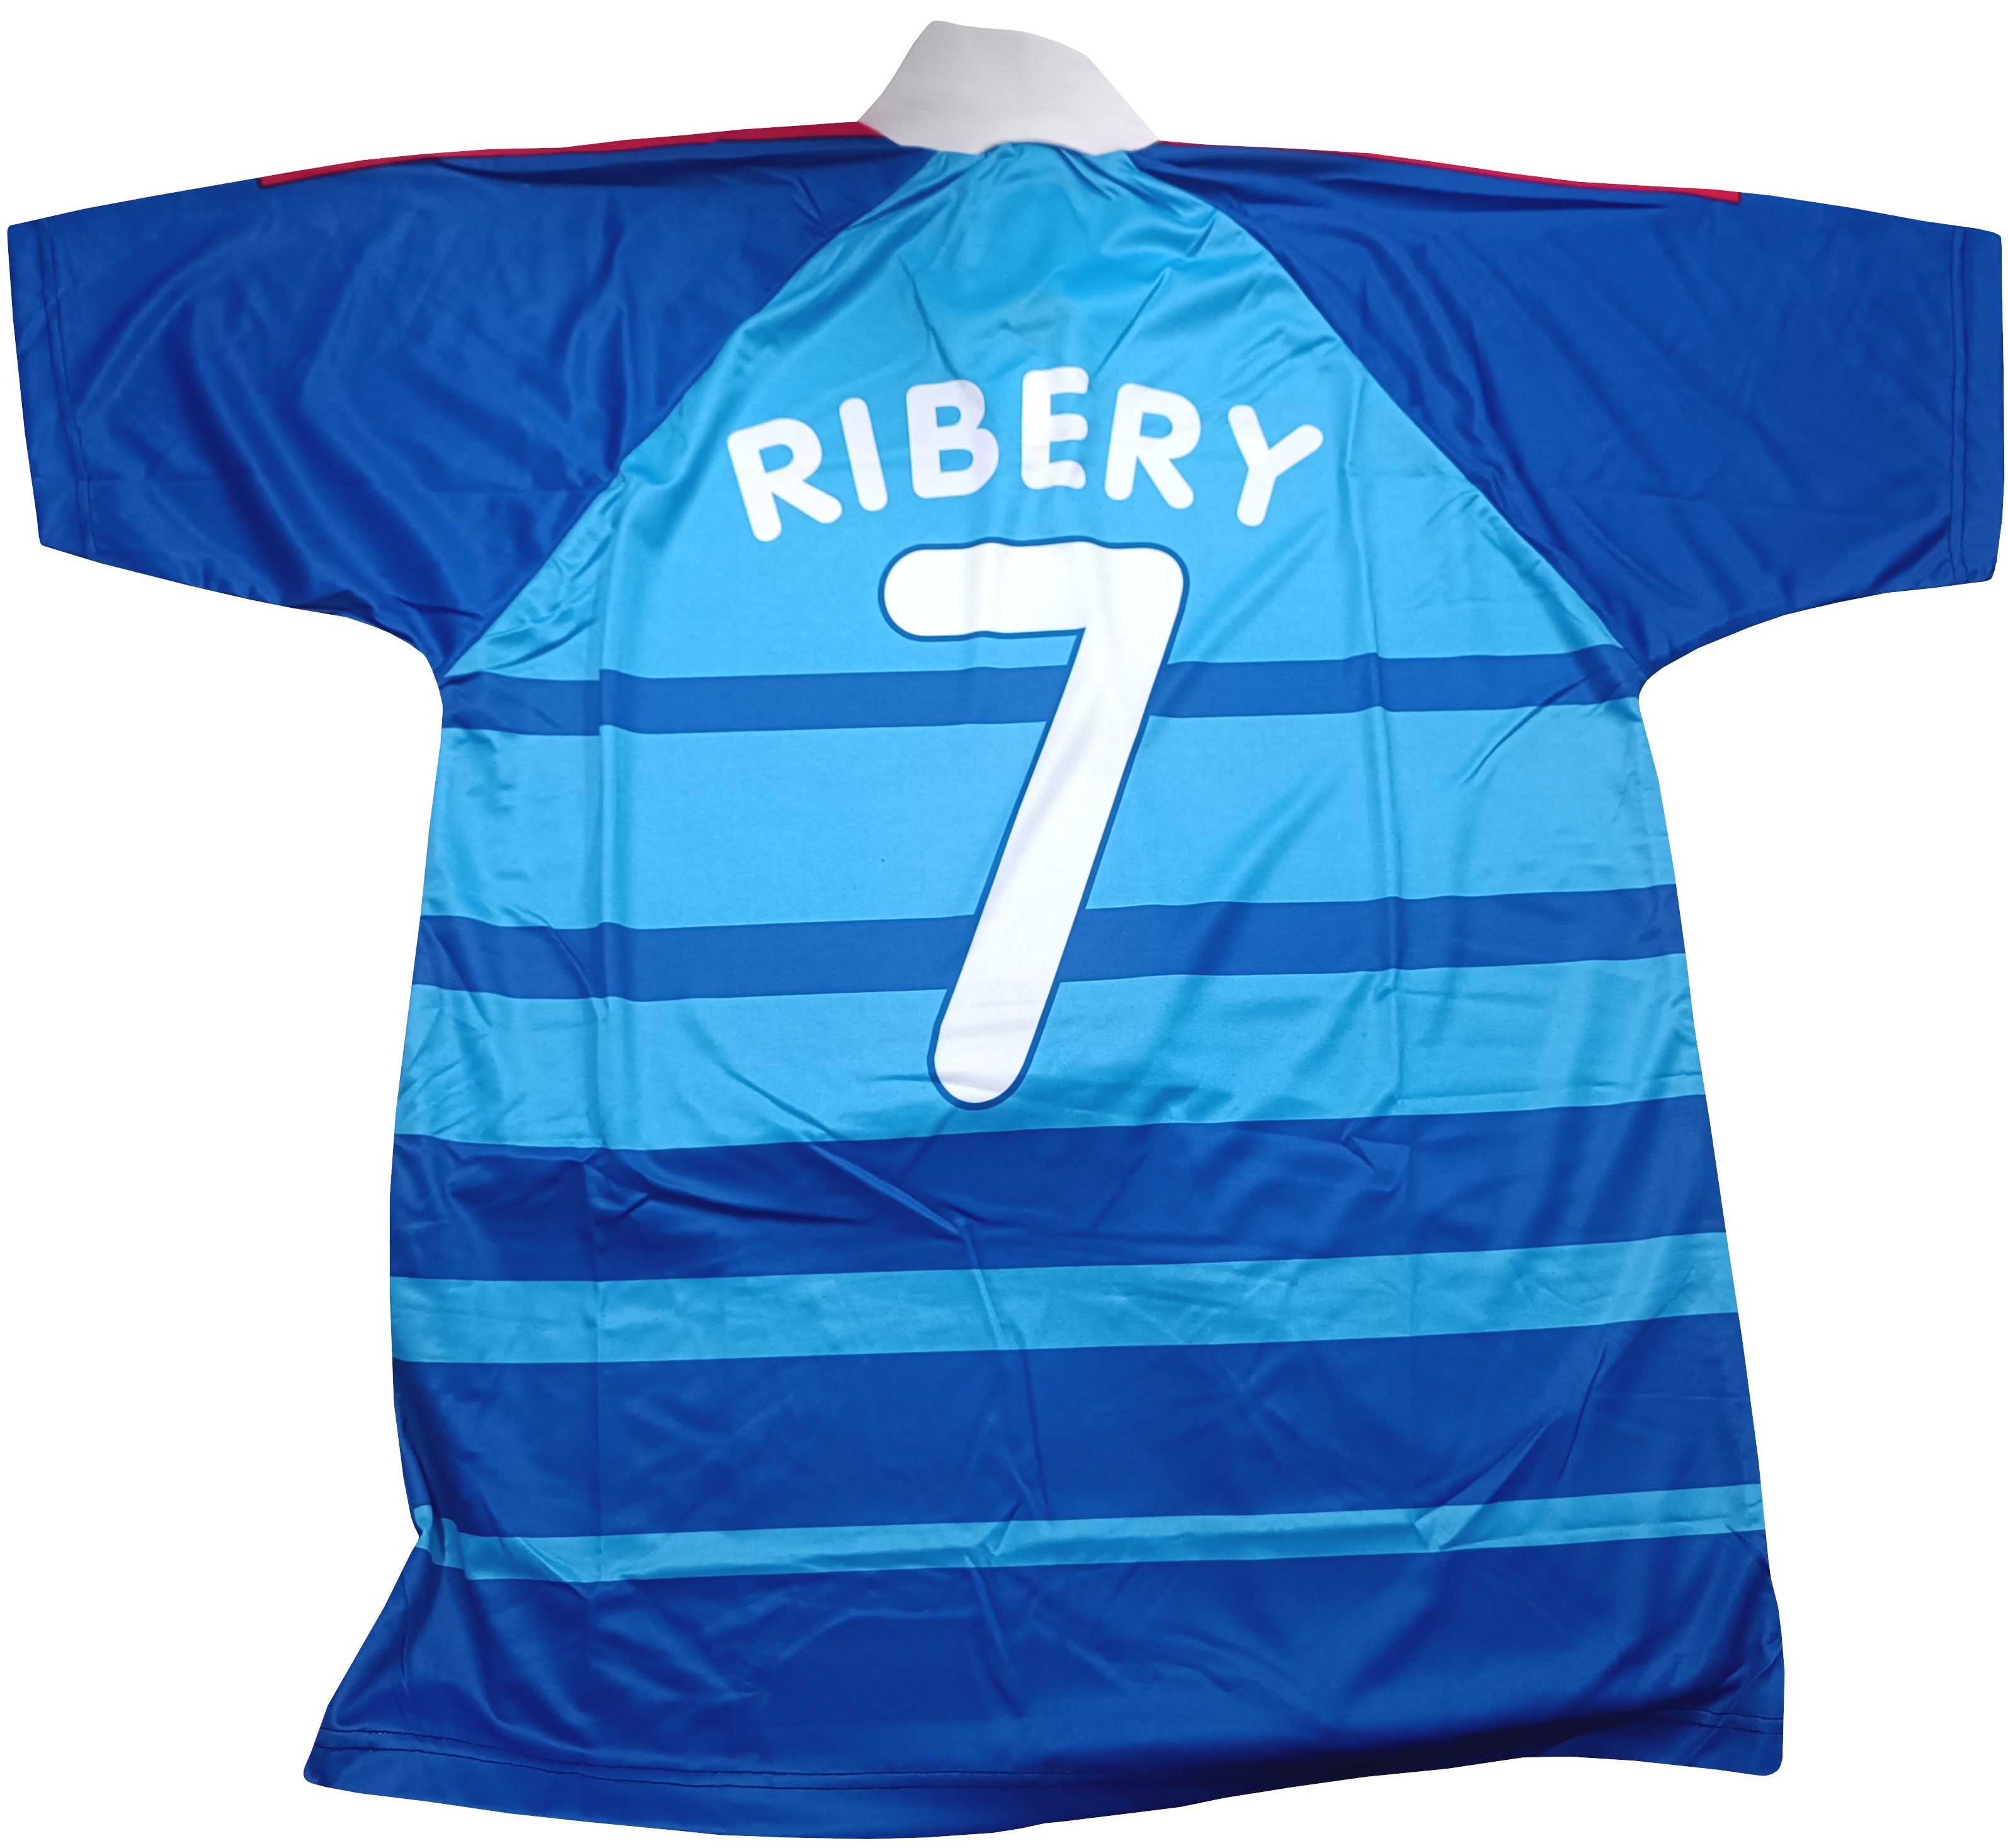 Fotbalový dres Ribery 7 Francie - výprodej Velikost: XXL povánoční sleva